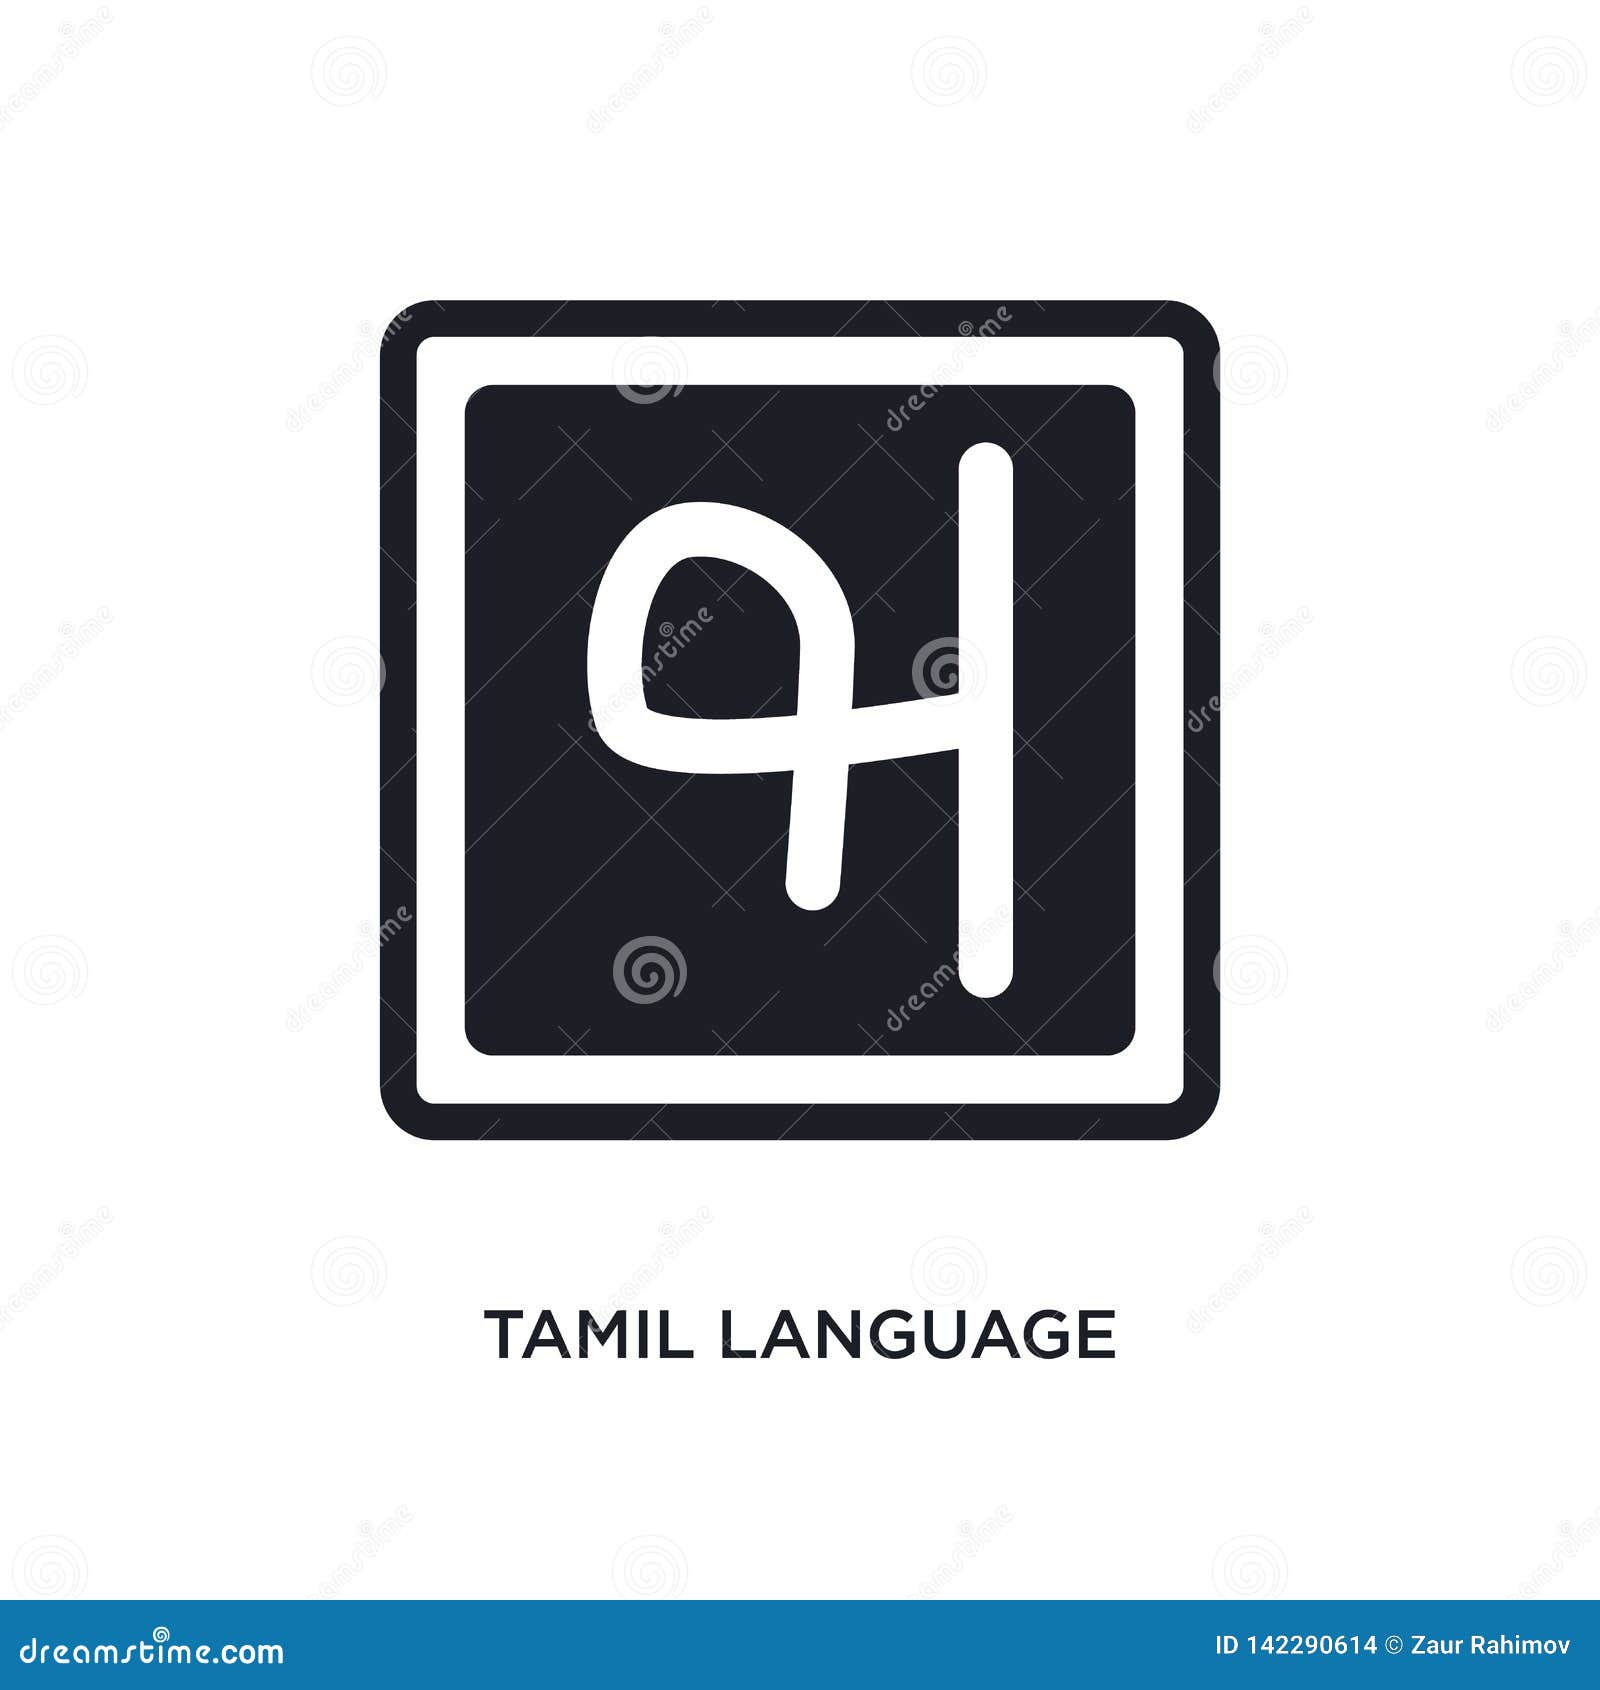 Hear. Tamil. Logo Version by Paulwin Jerome Martin on Dribbble